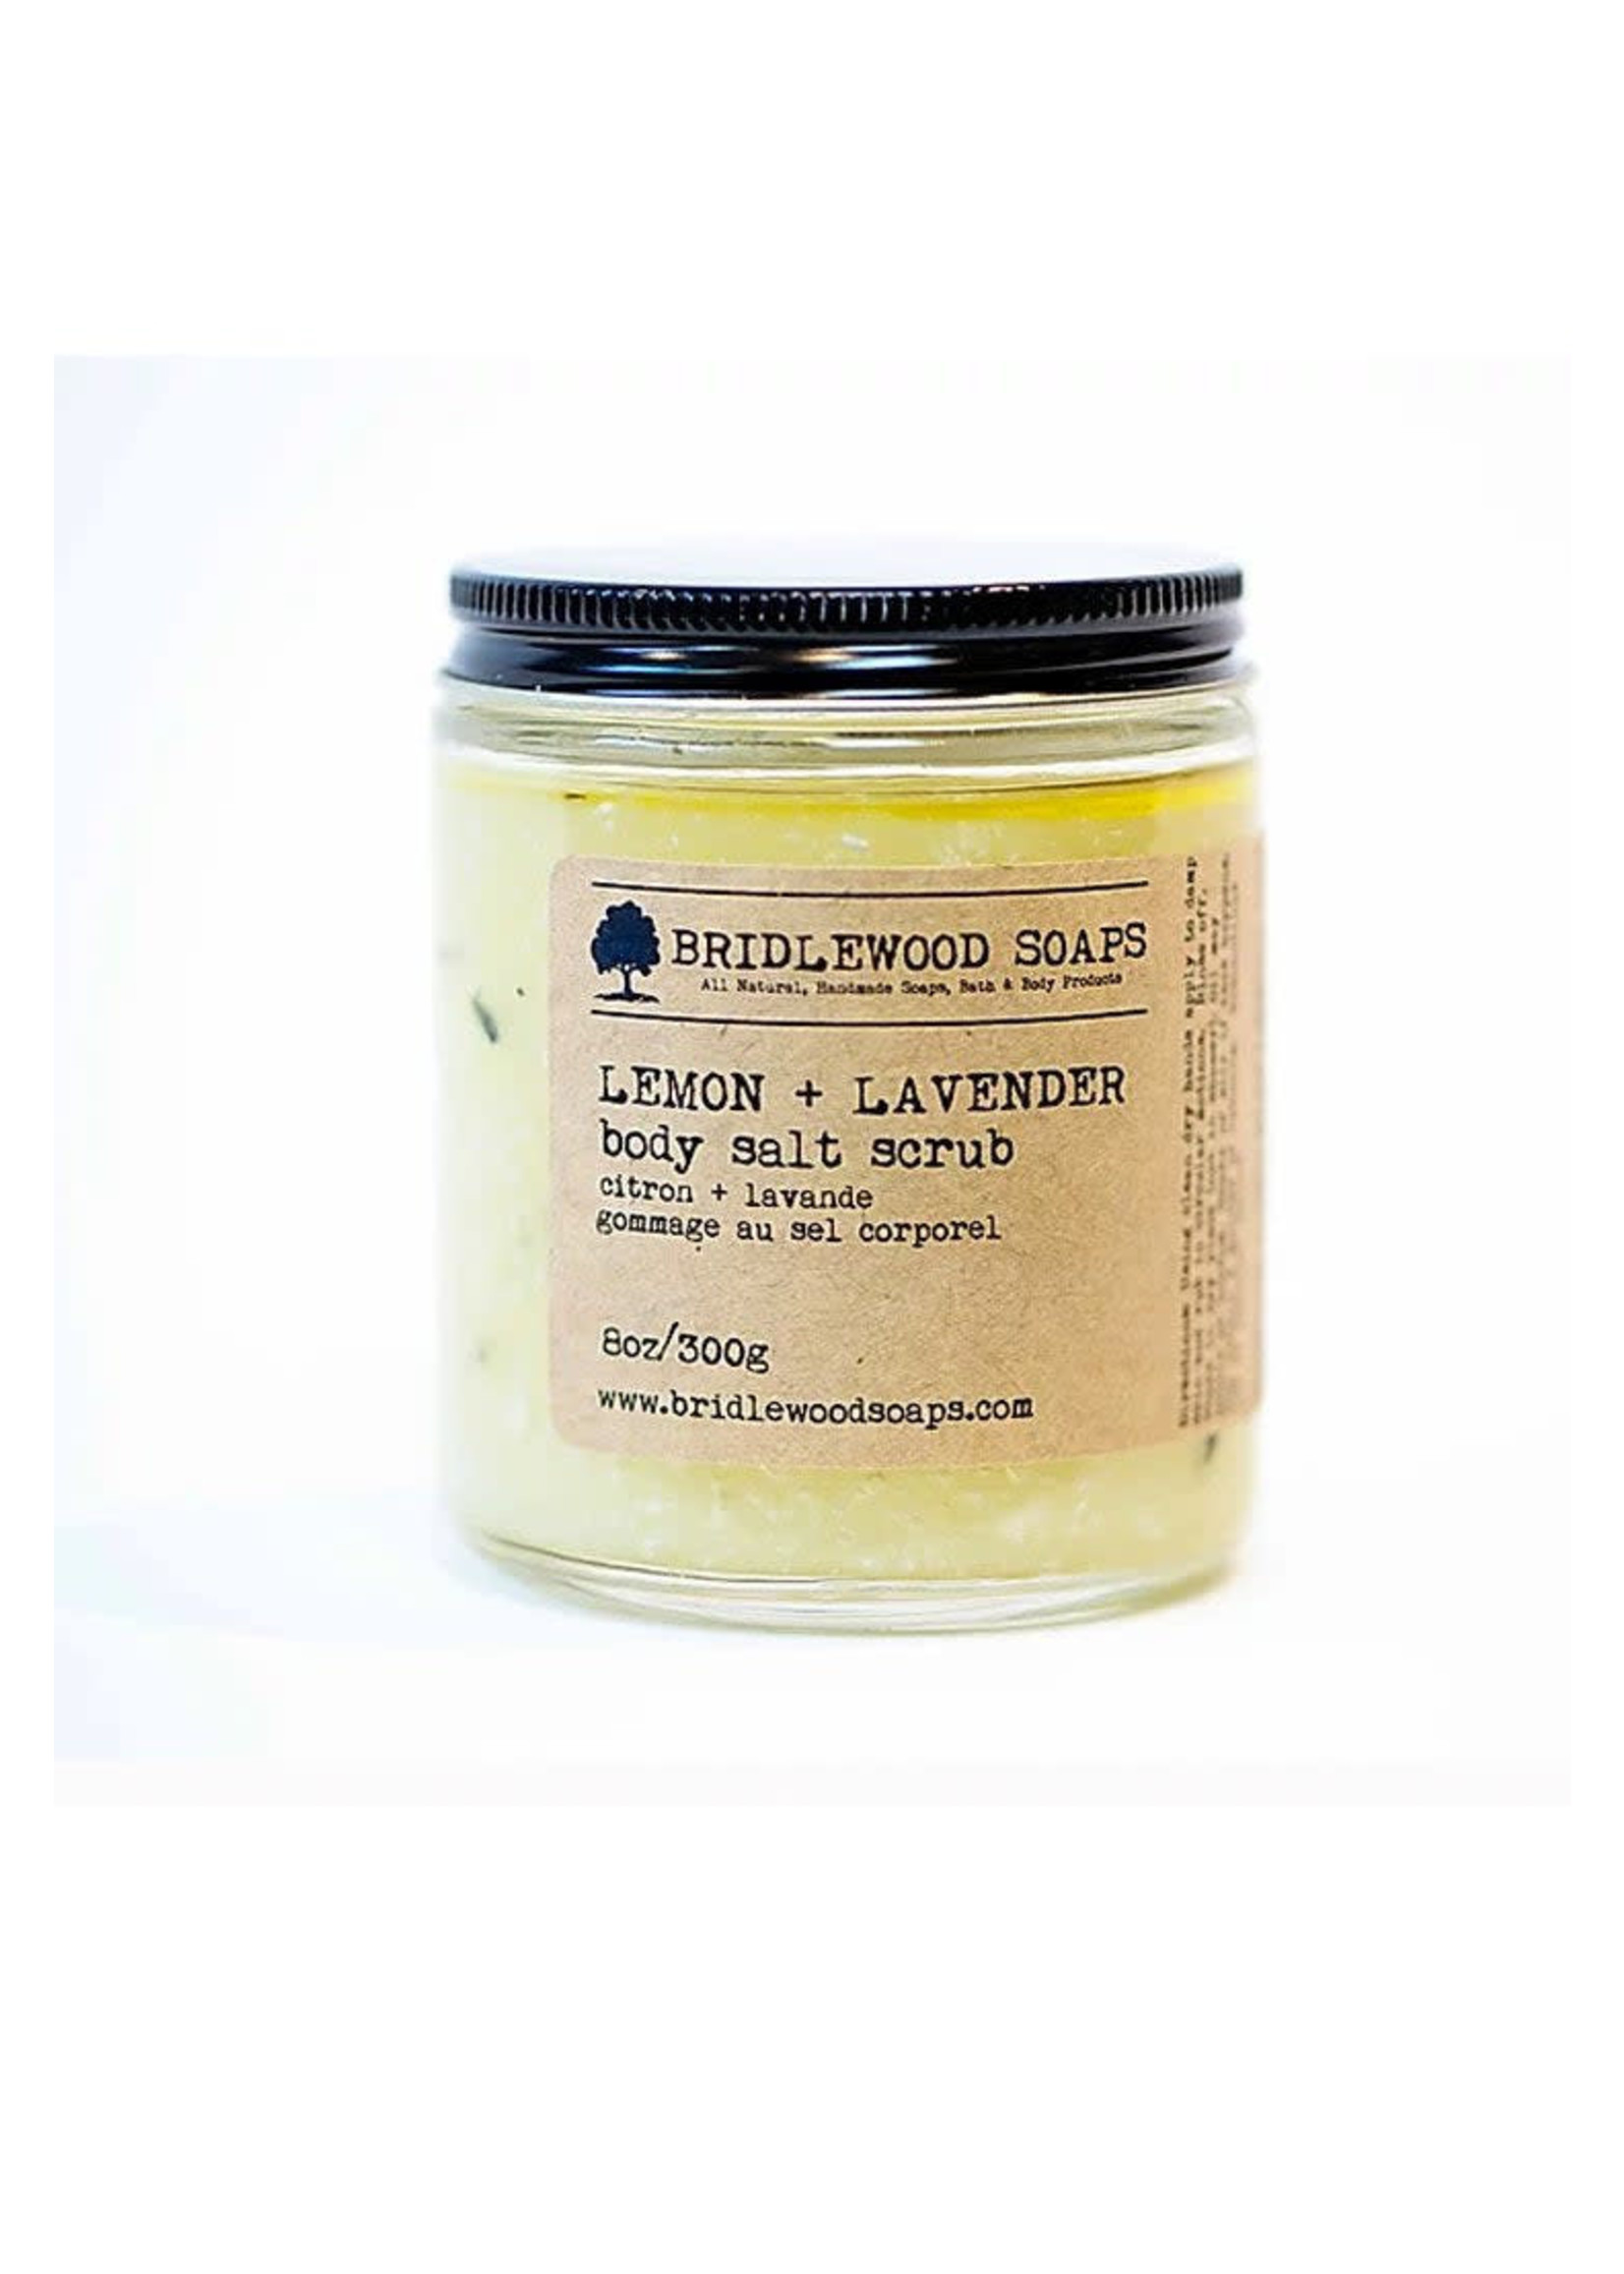 Bridlewood Soaps Lemon & Lavender Body Salt Scrub